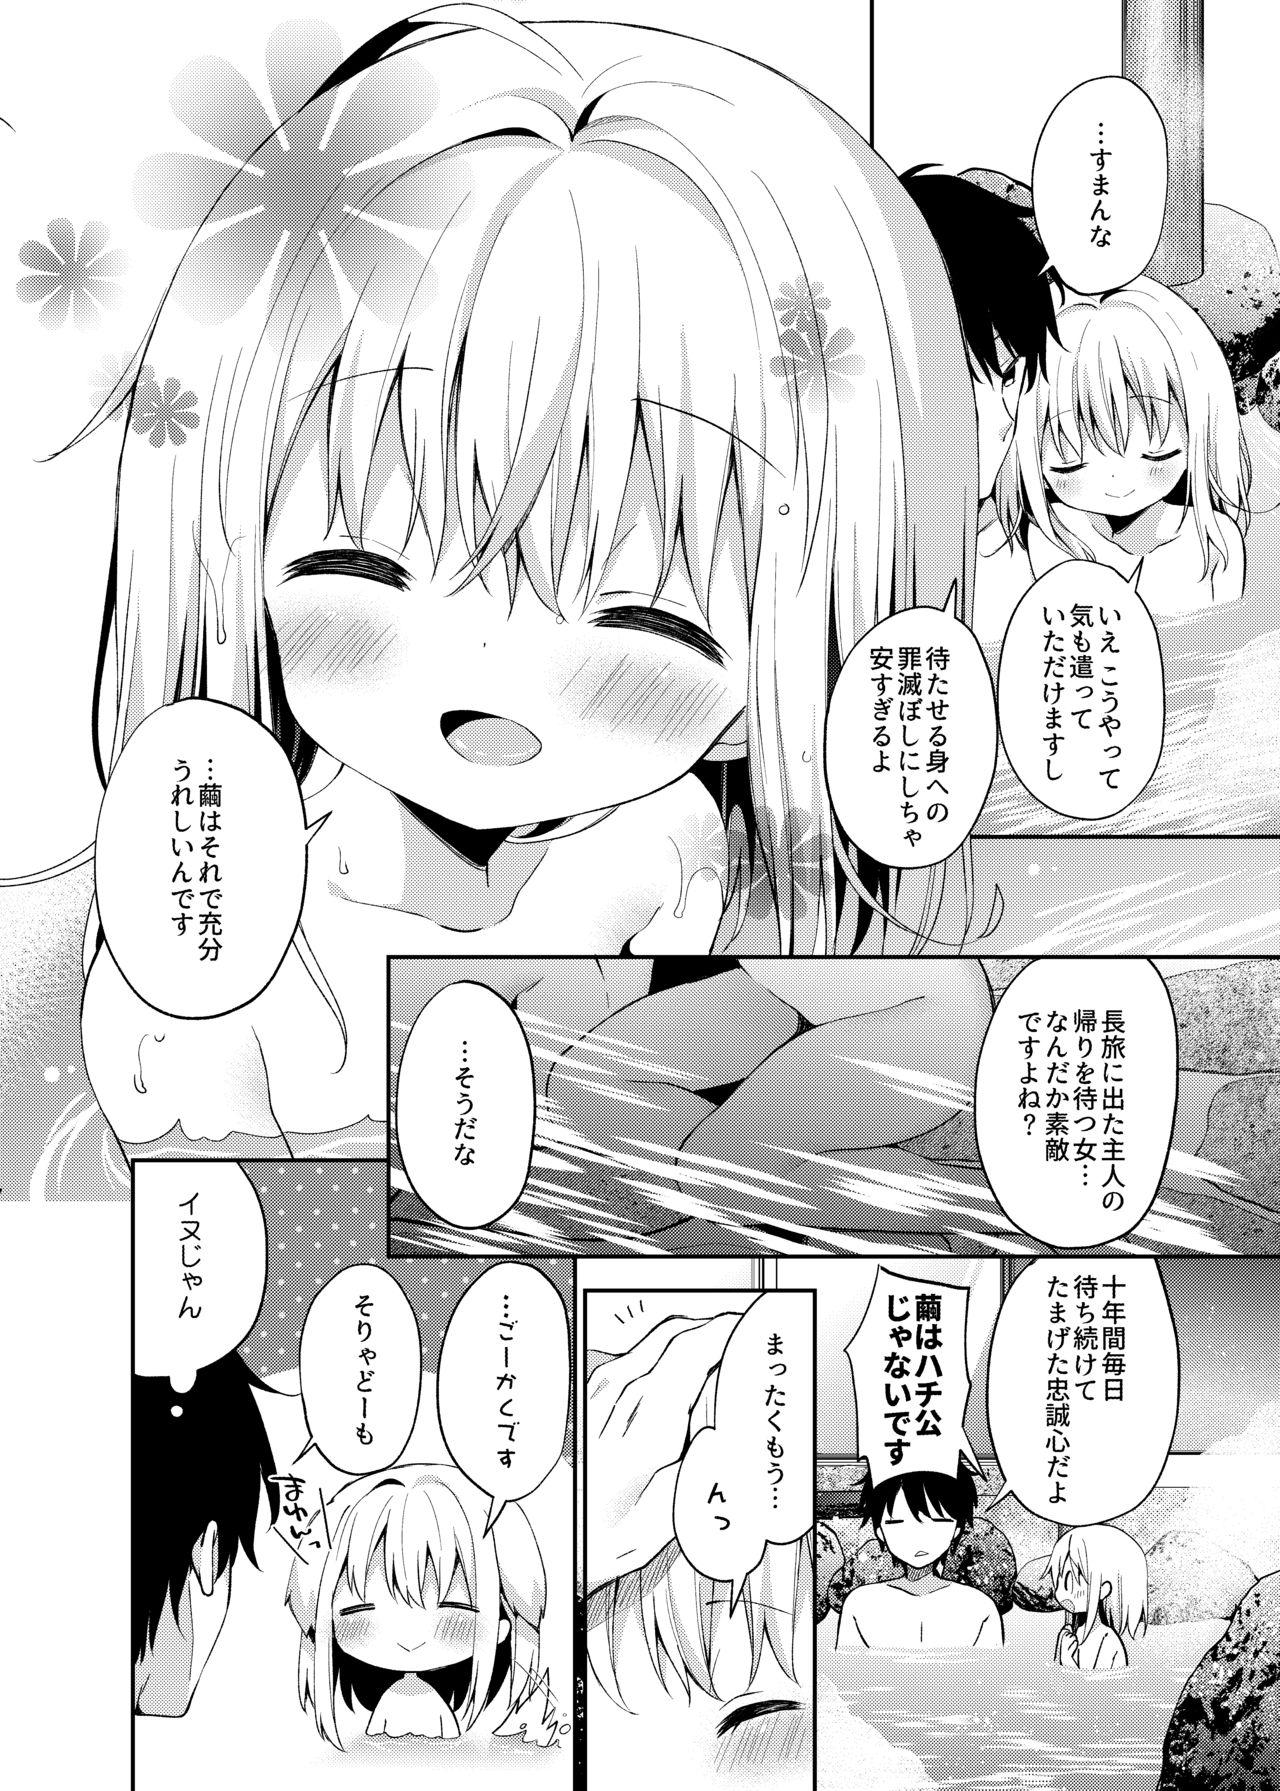 Milk Onnanoko no Mayu 4 - Original Gaydudes - Page 7